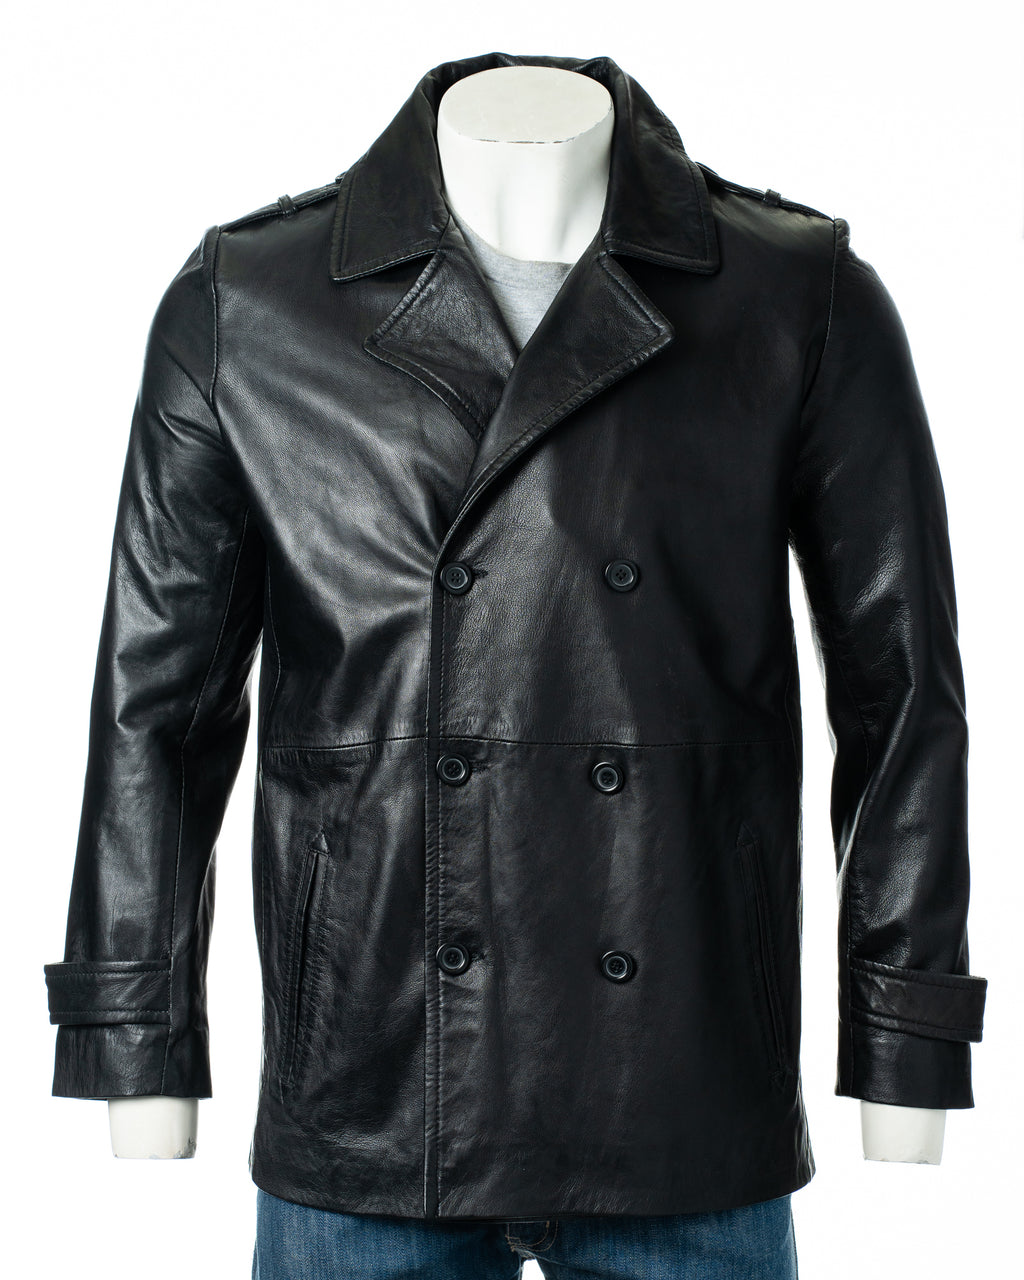 Men's Black Leather Peacoat: Guistino